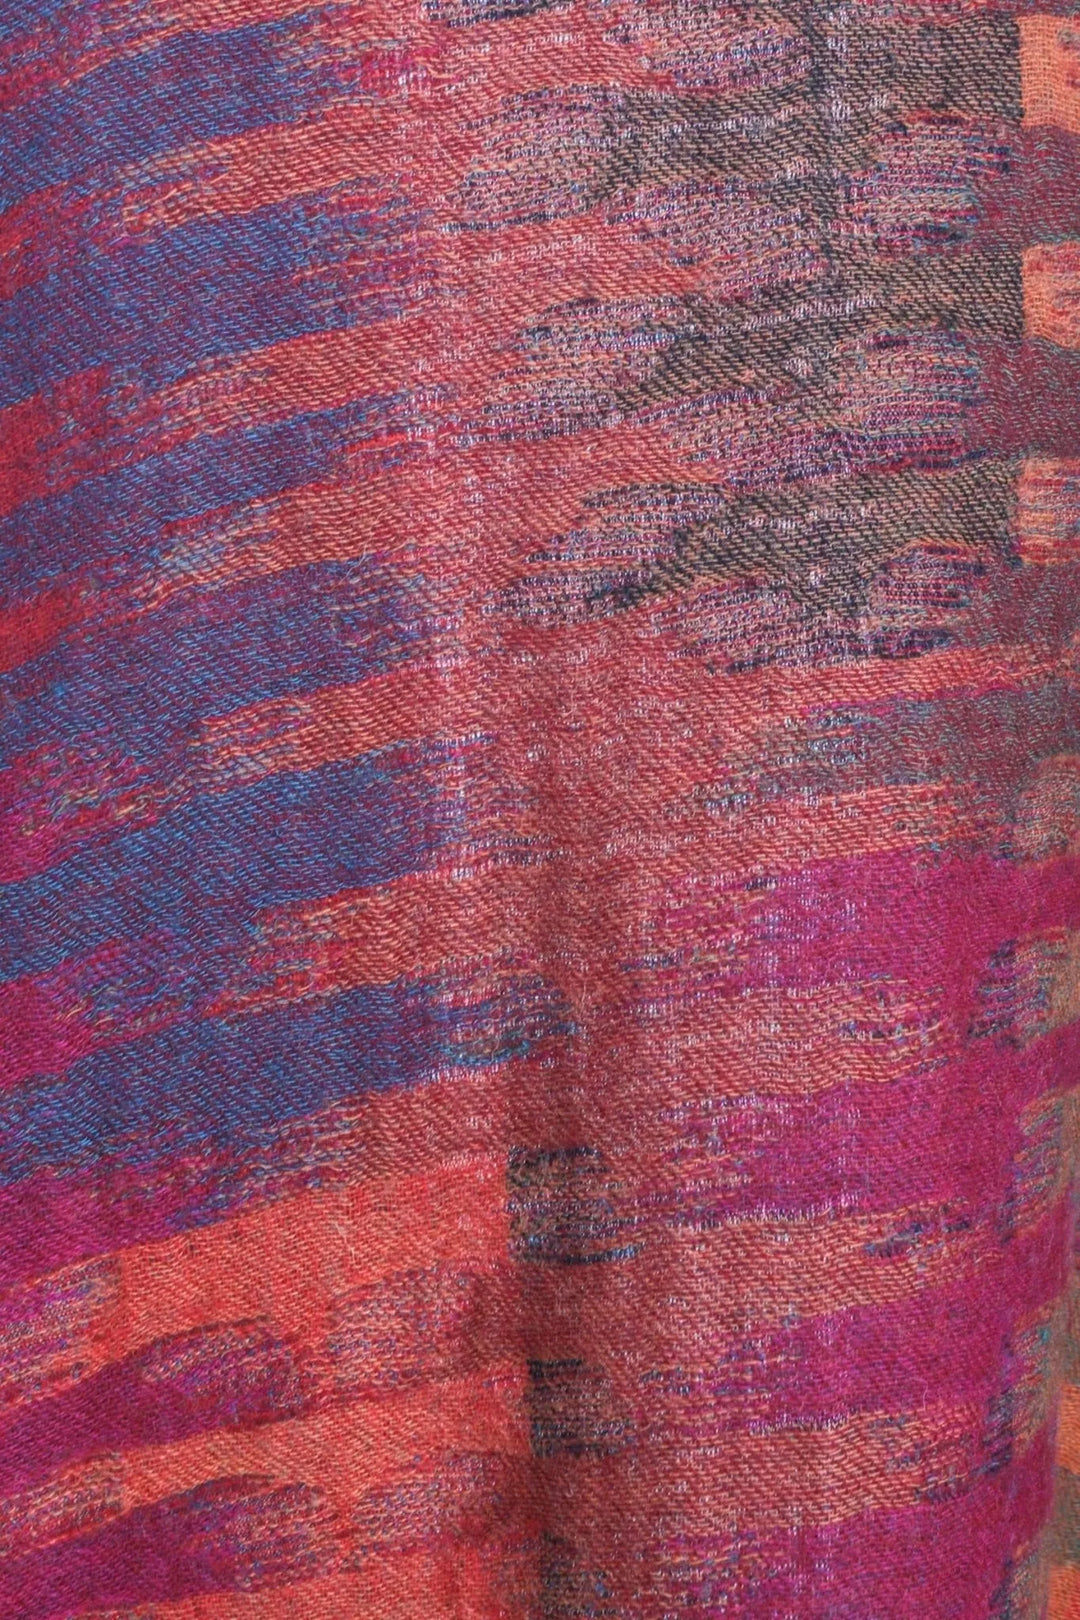 Cotton Retro Striped Fringe Long Jacket Pale Violetred